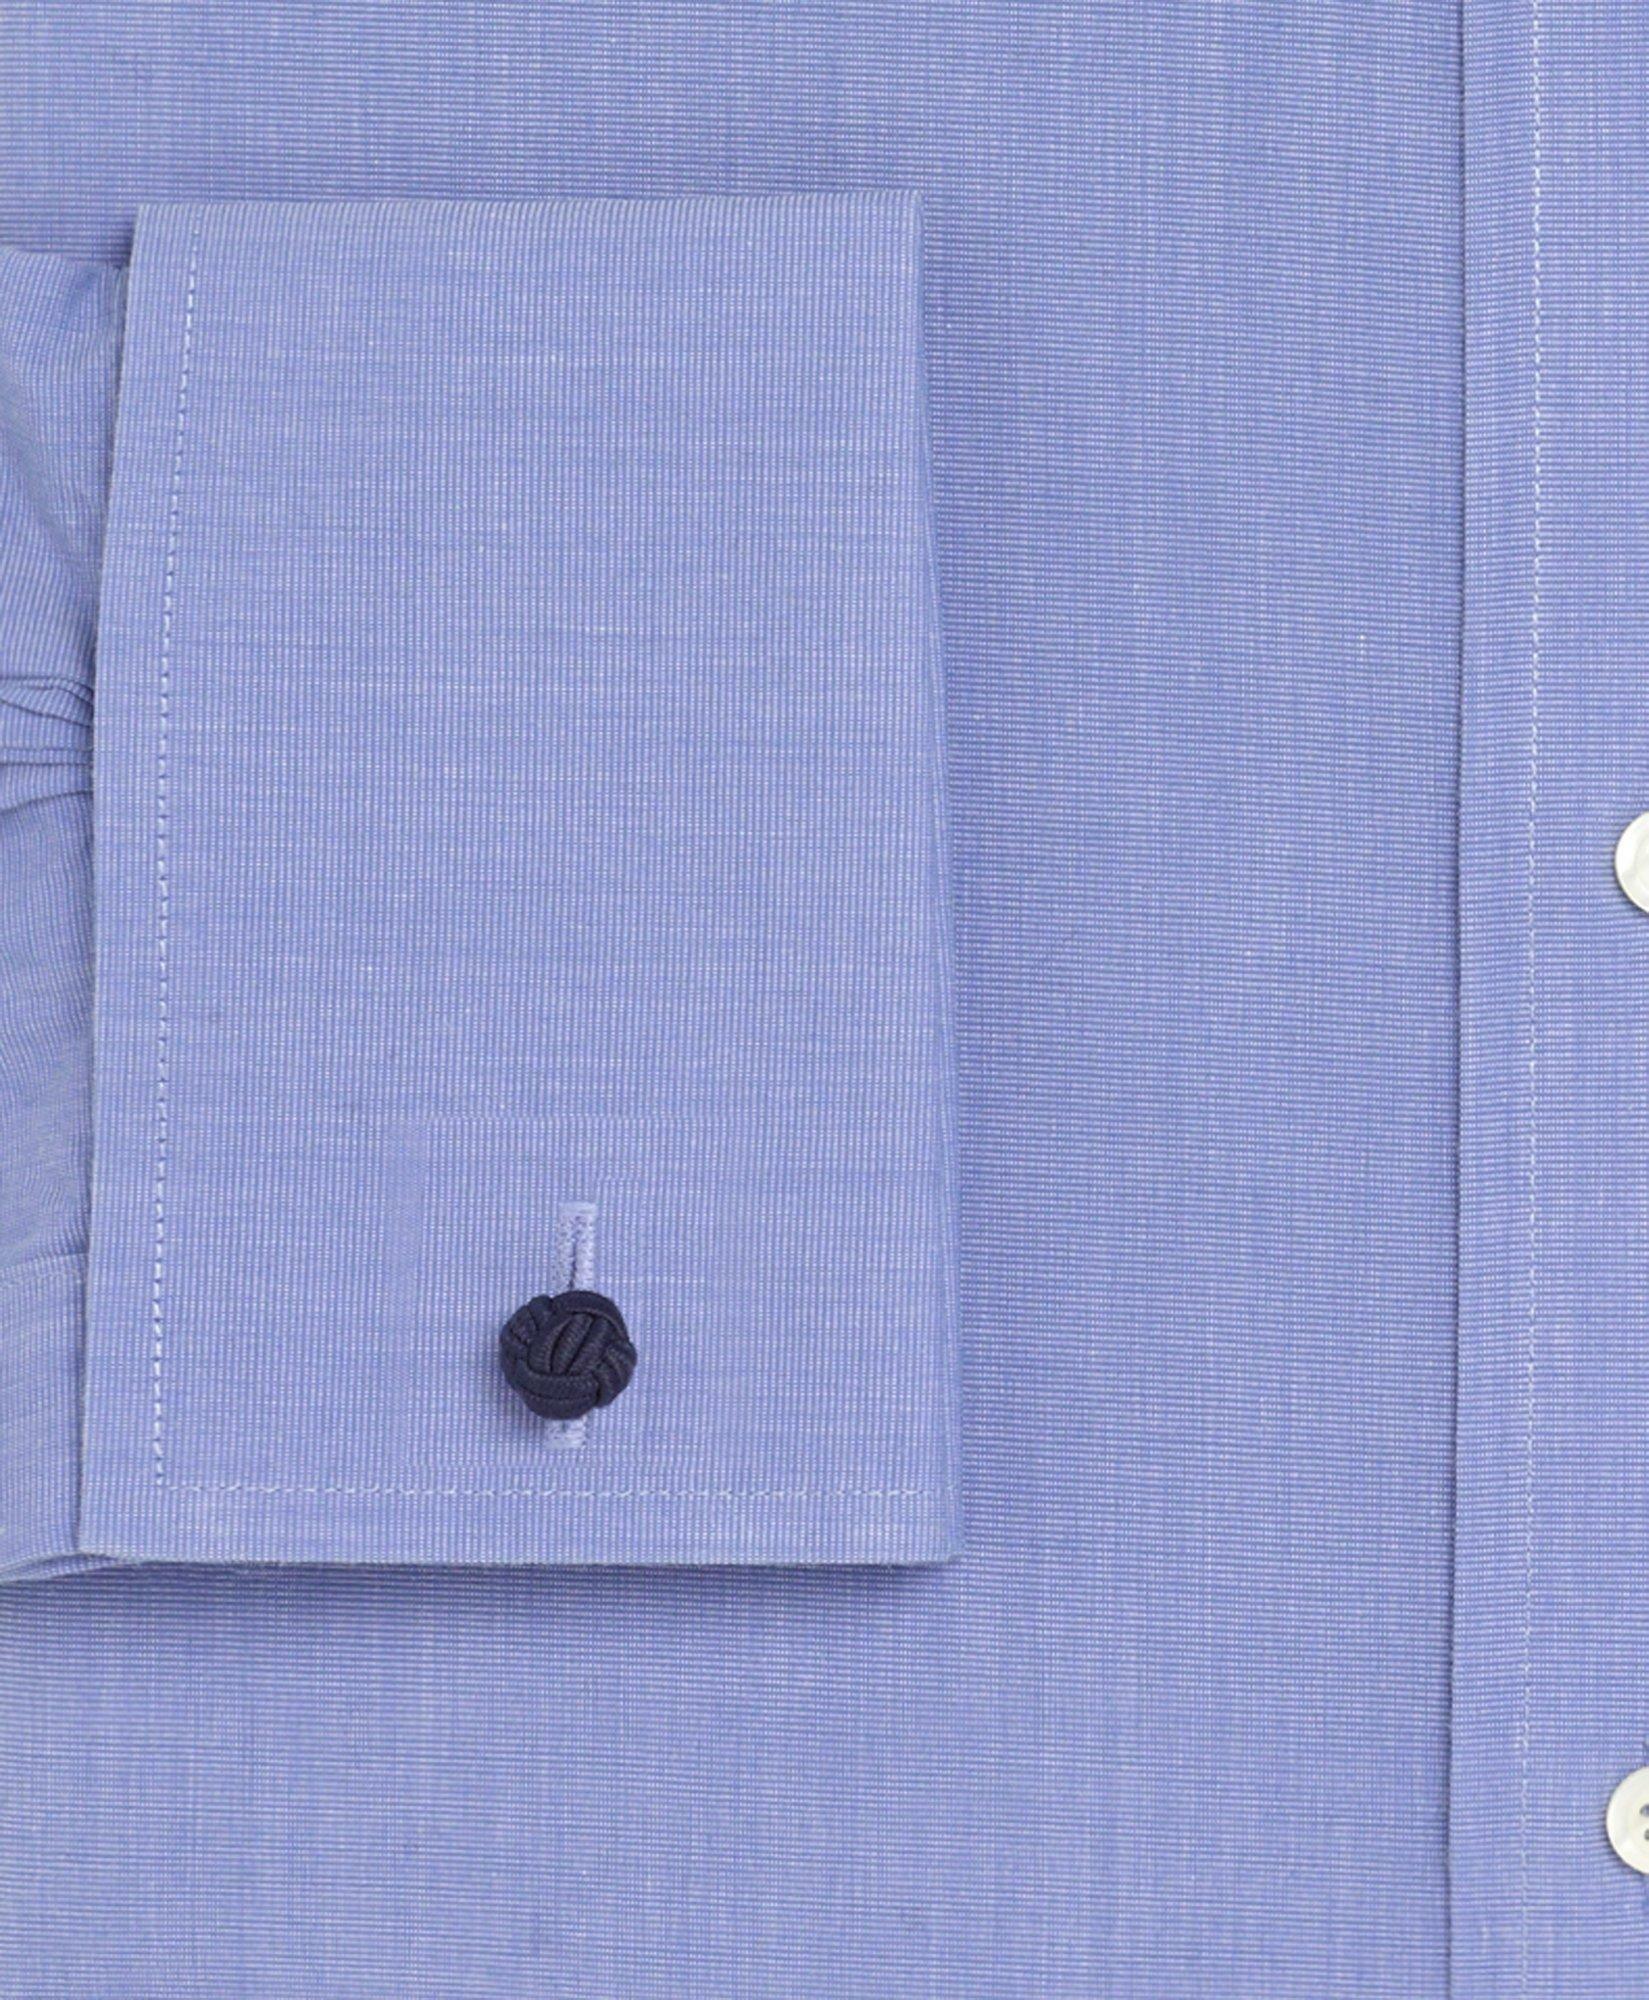 Brooks Brothers Men's Regent Regular-Fit Dress Shirt, Non-Iron Spread Collar French Cuff | Blue